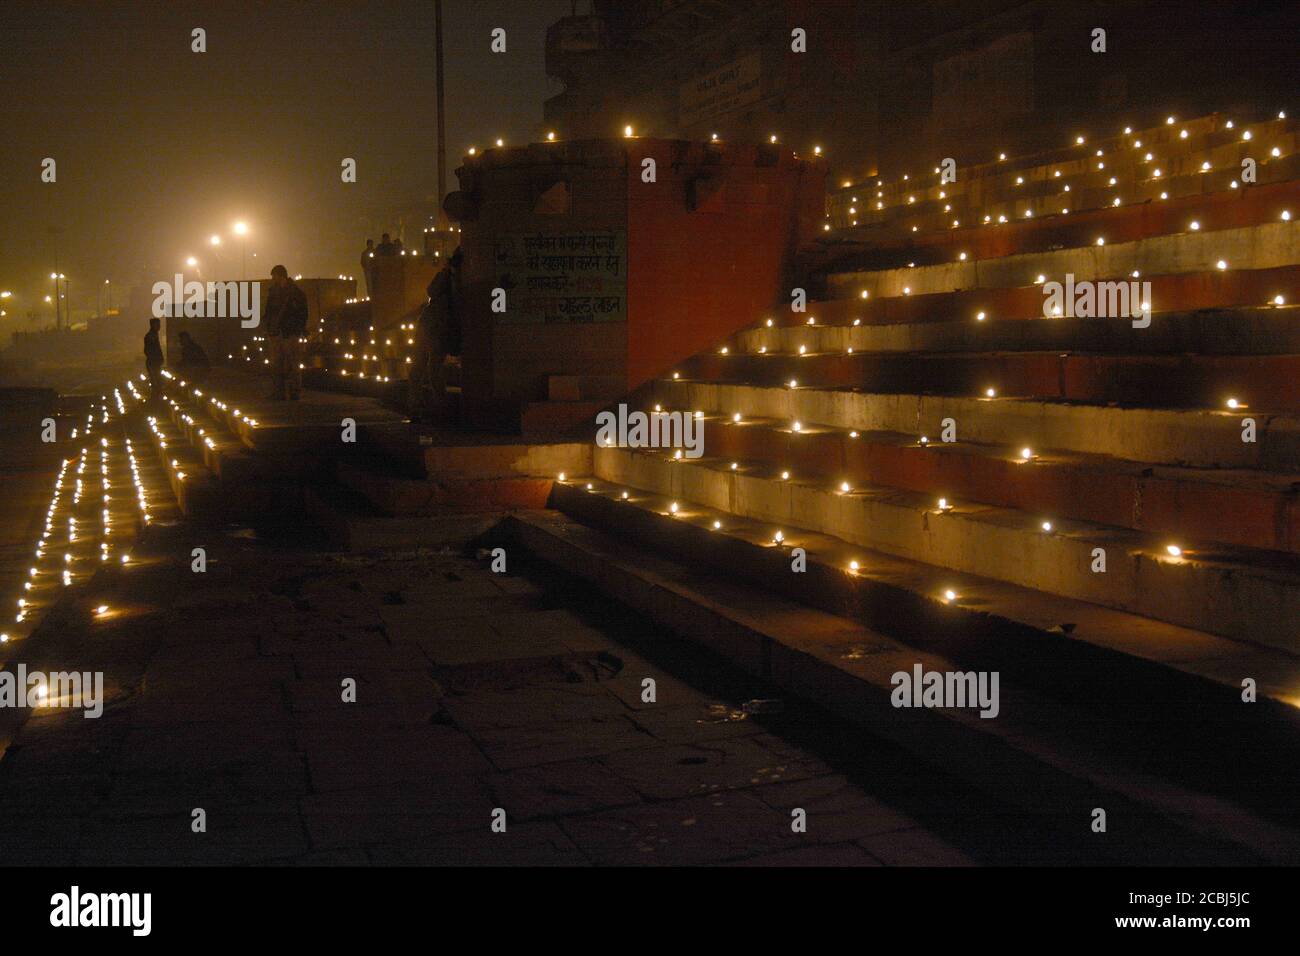 dev diwali celebration at varanasi Stock Photo